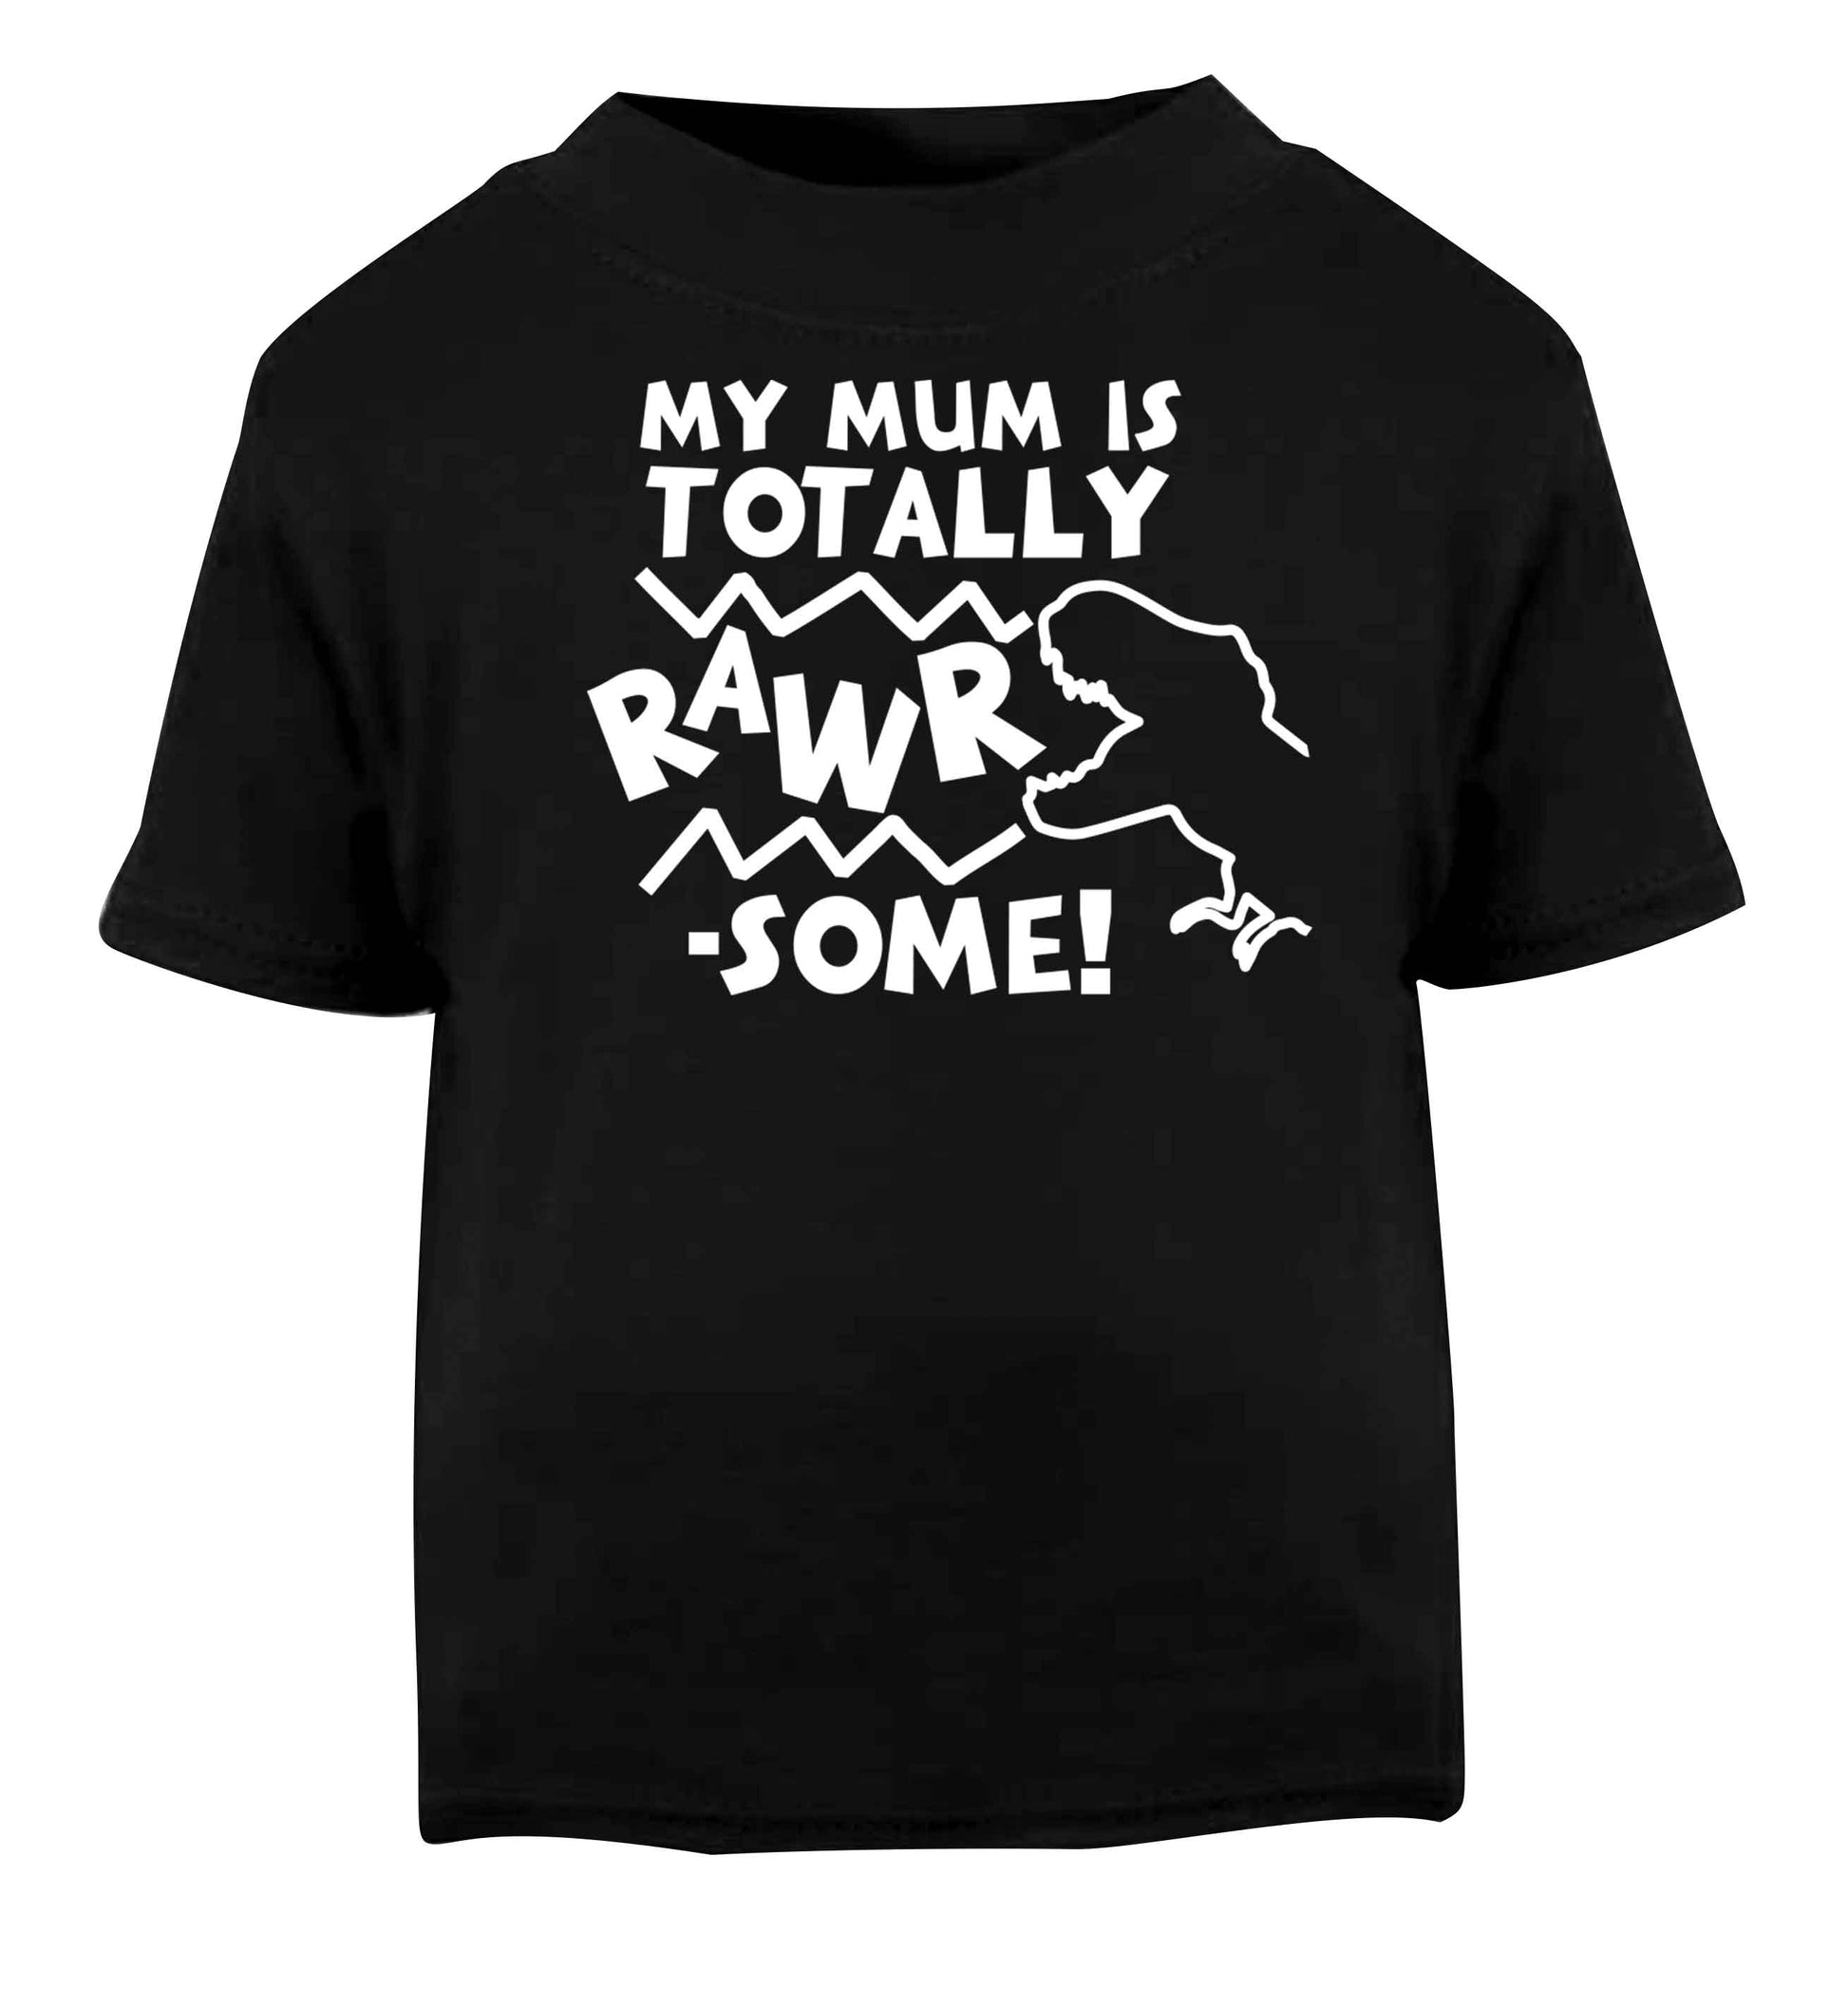 My mum is totally rawrsome Black baby toddler Tshirt 2 years